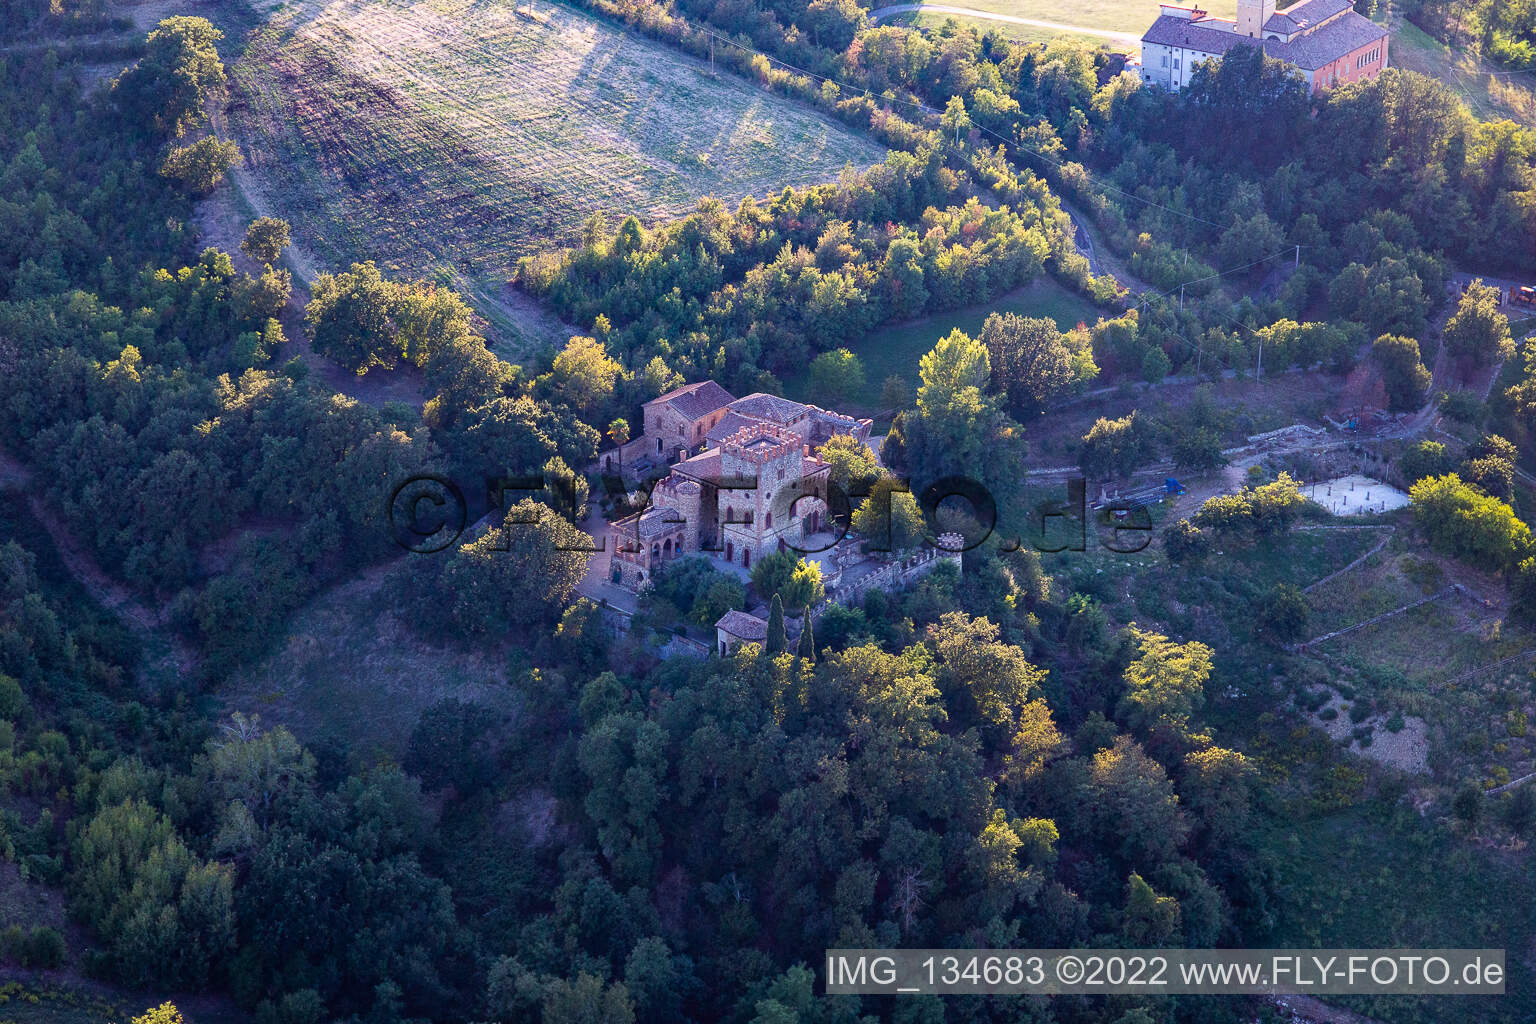 Luftbild von Castello della Torricella in Scandiano im Bundesland Reggio Emilia, Italien